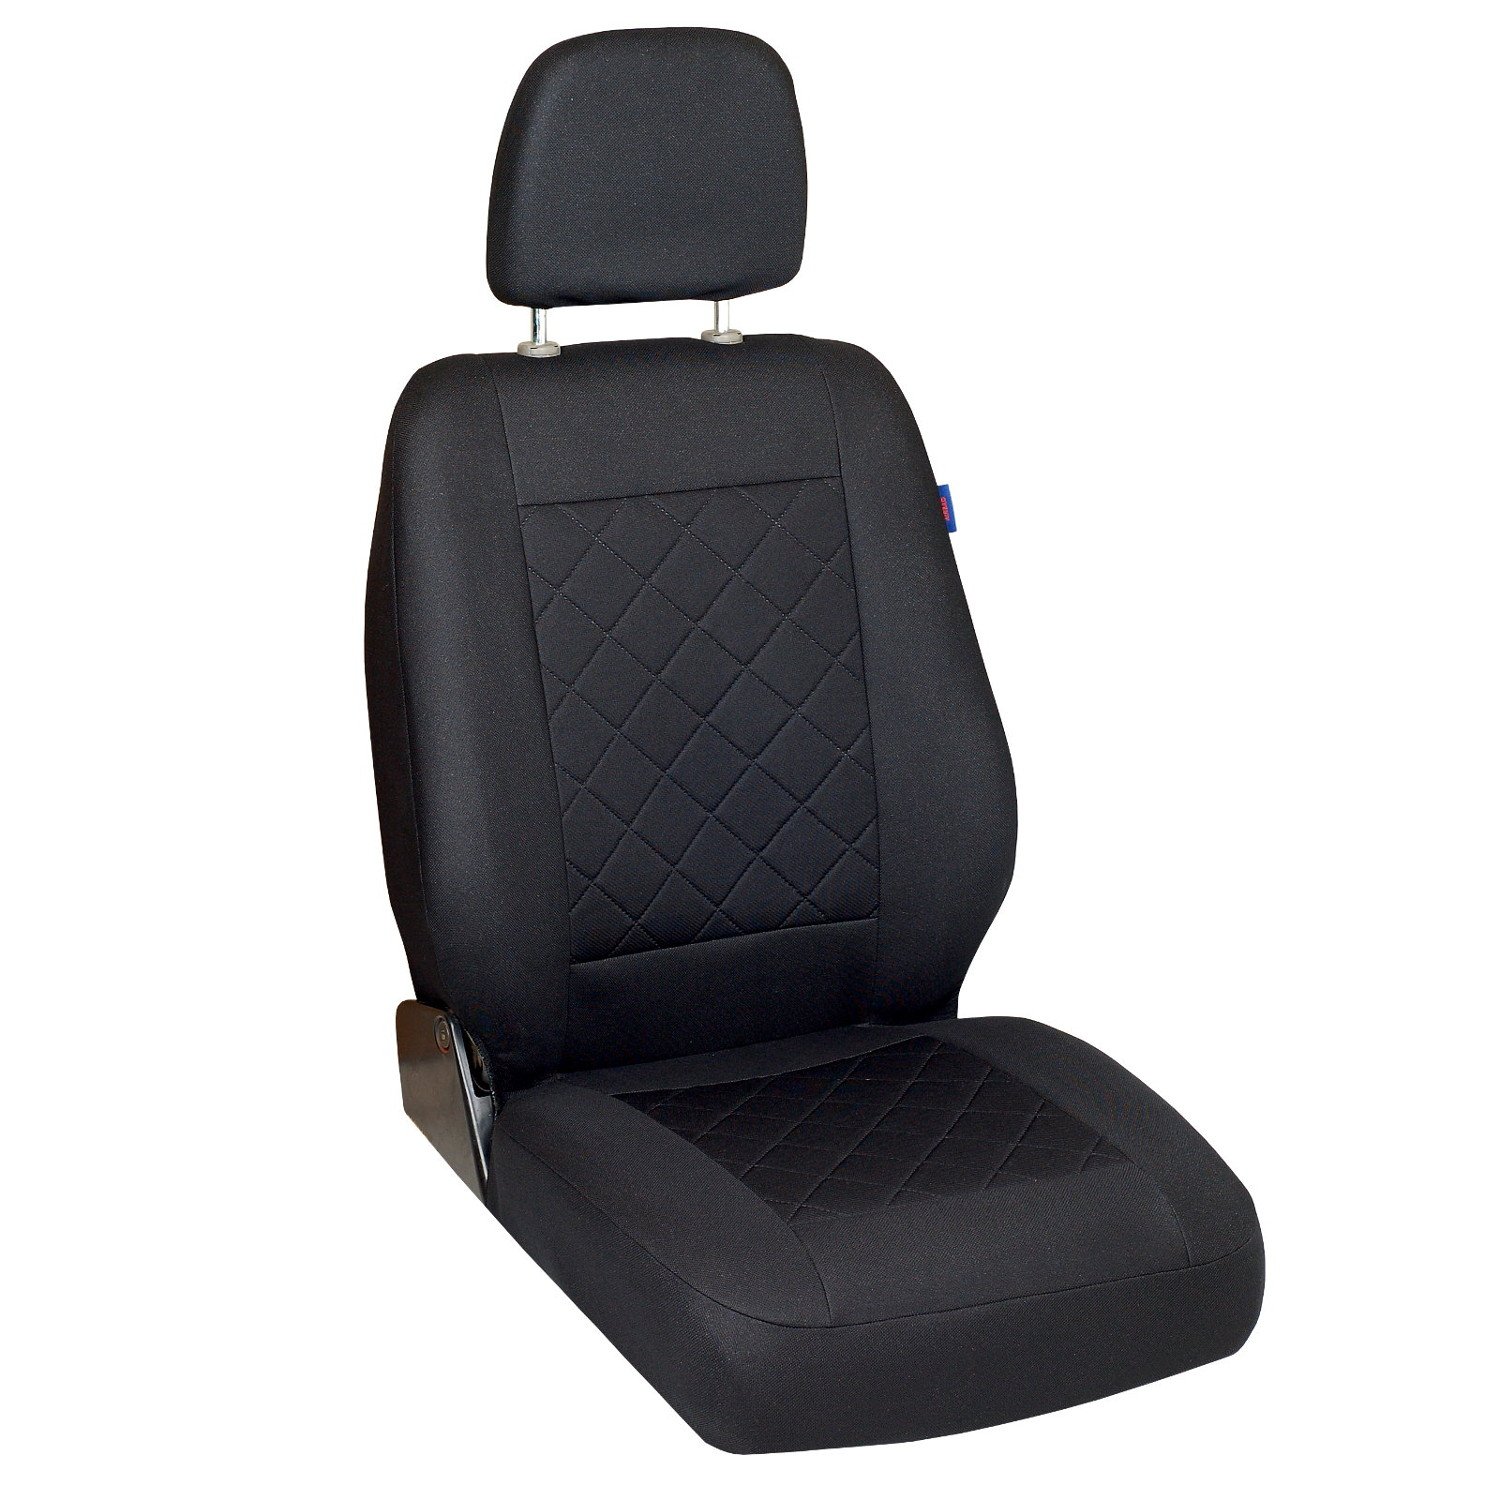 J5 Sitzbezug - Fahrersitz - Farbe Premium Schwarz gepresstes Karomuster